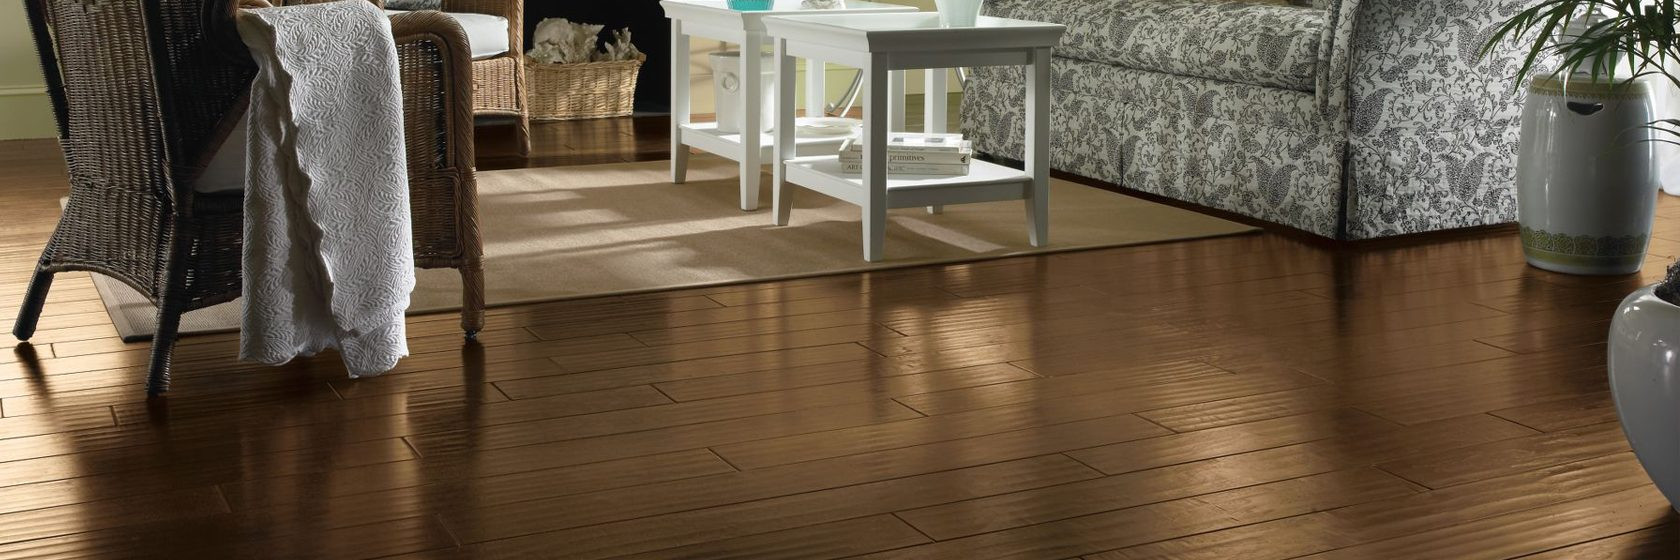 armstrong hardwood laminate floor cleaner of walnut engineered hardwood summer white gcw484swlg in hero l 1680 560